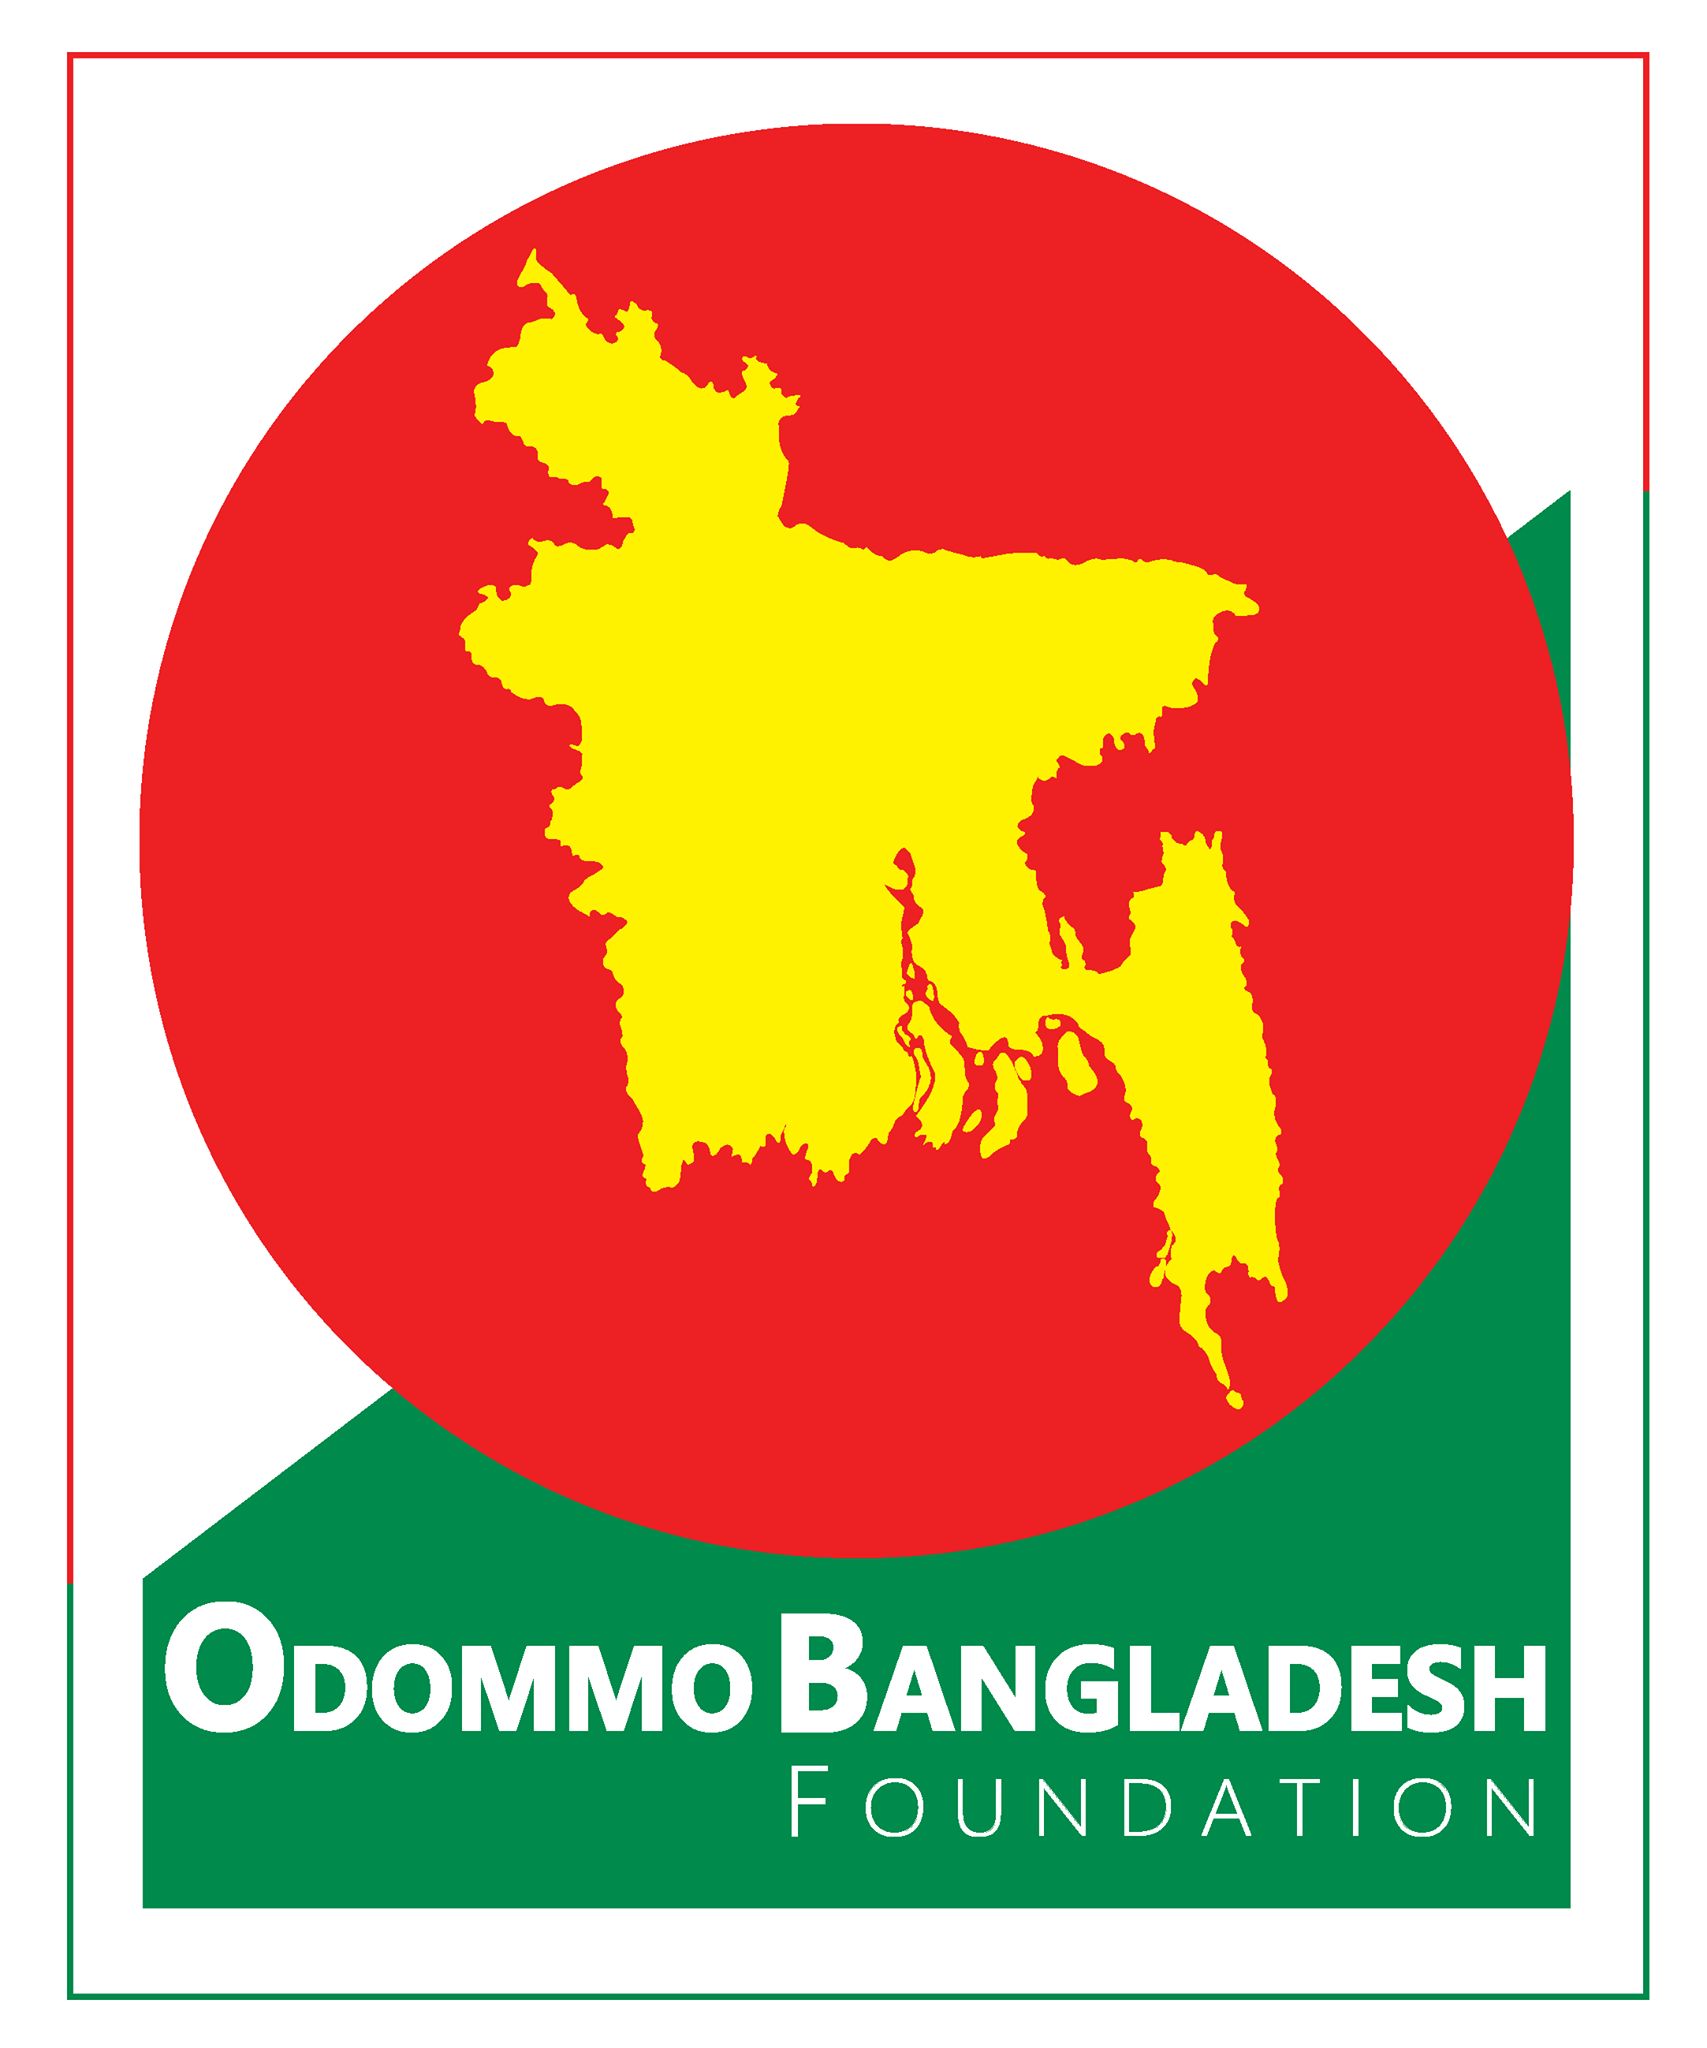 Odommo Bangladesh Foundation